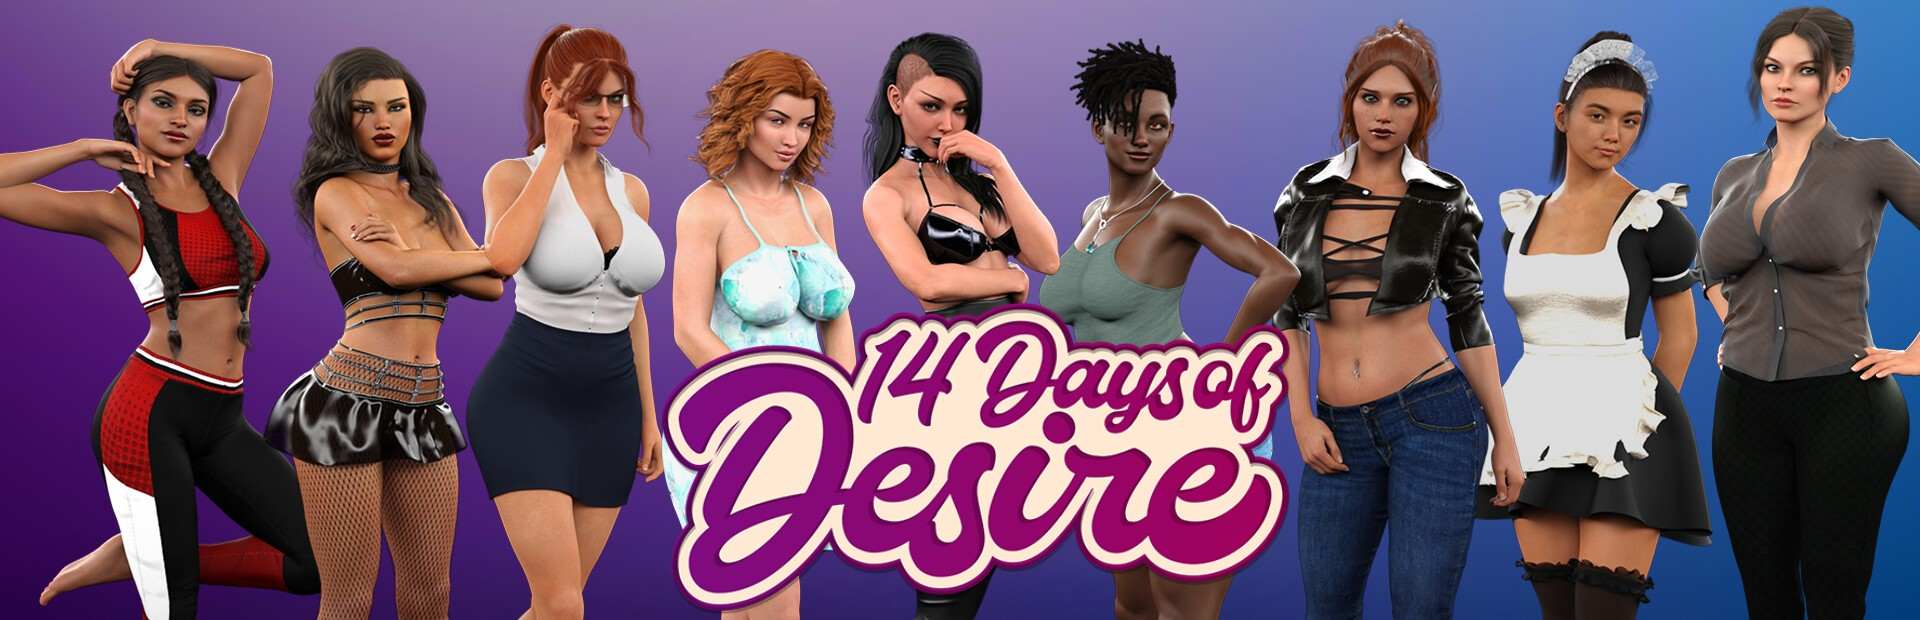 14 Days of Desire [Softlock Interactive] Adult xxx Game Download